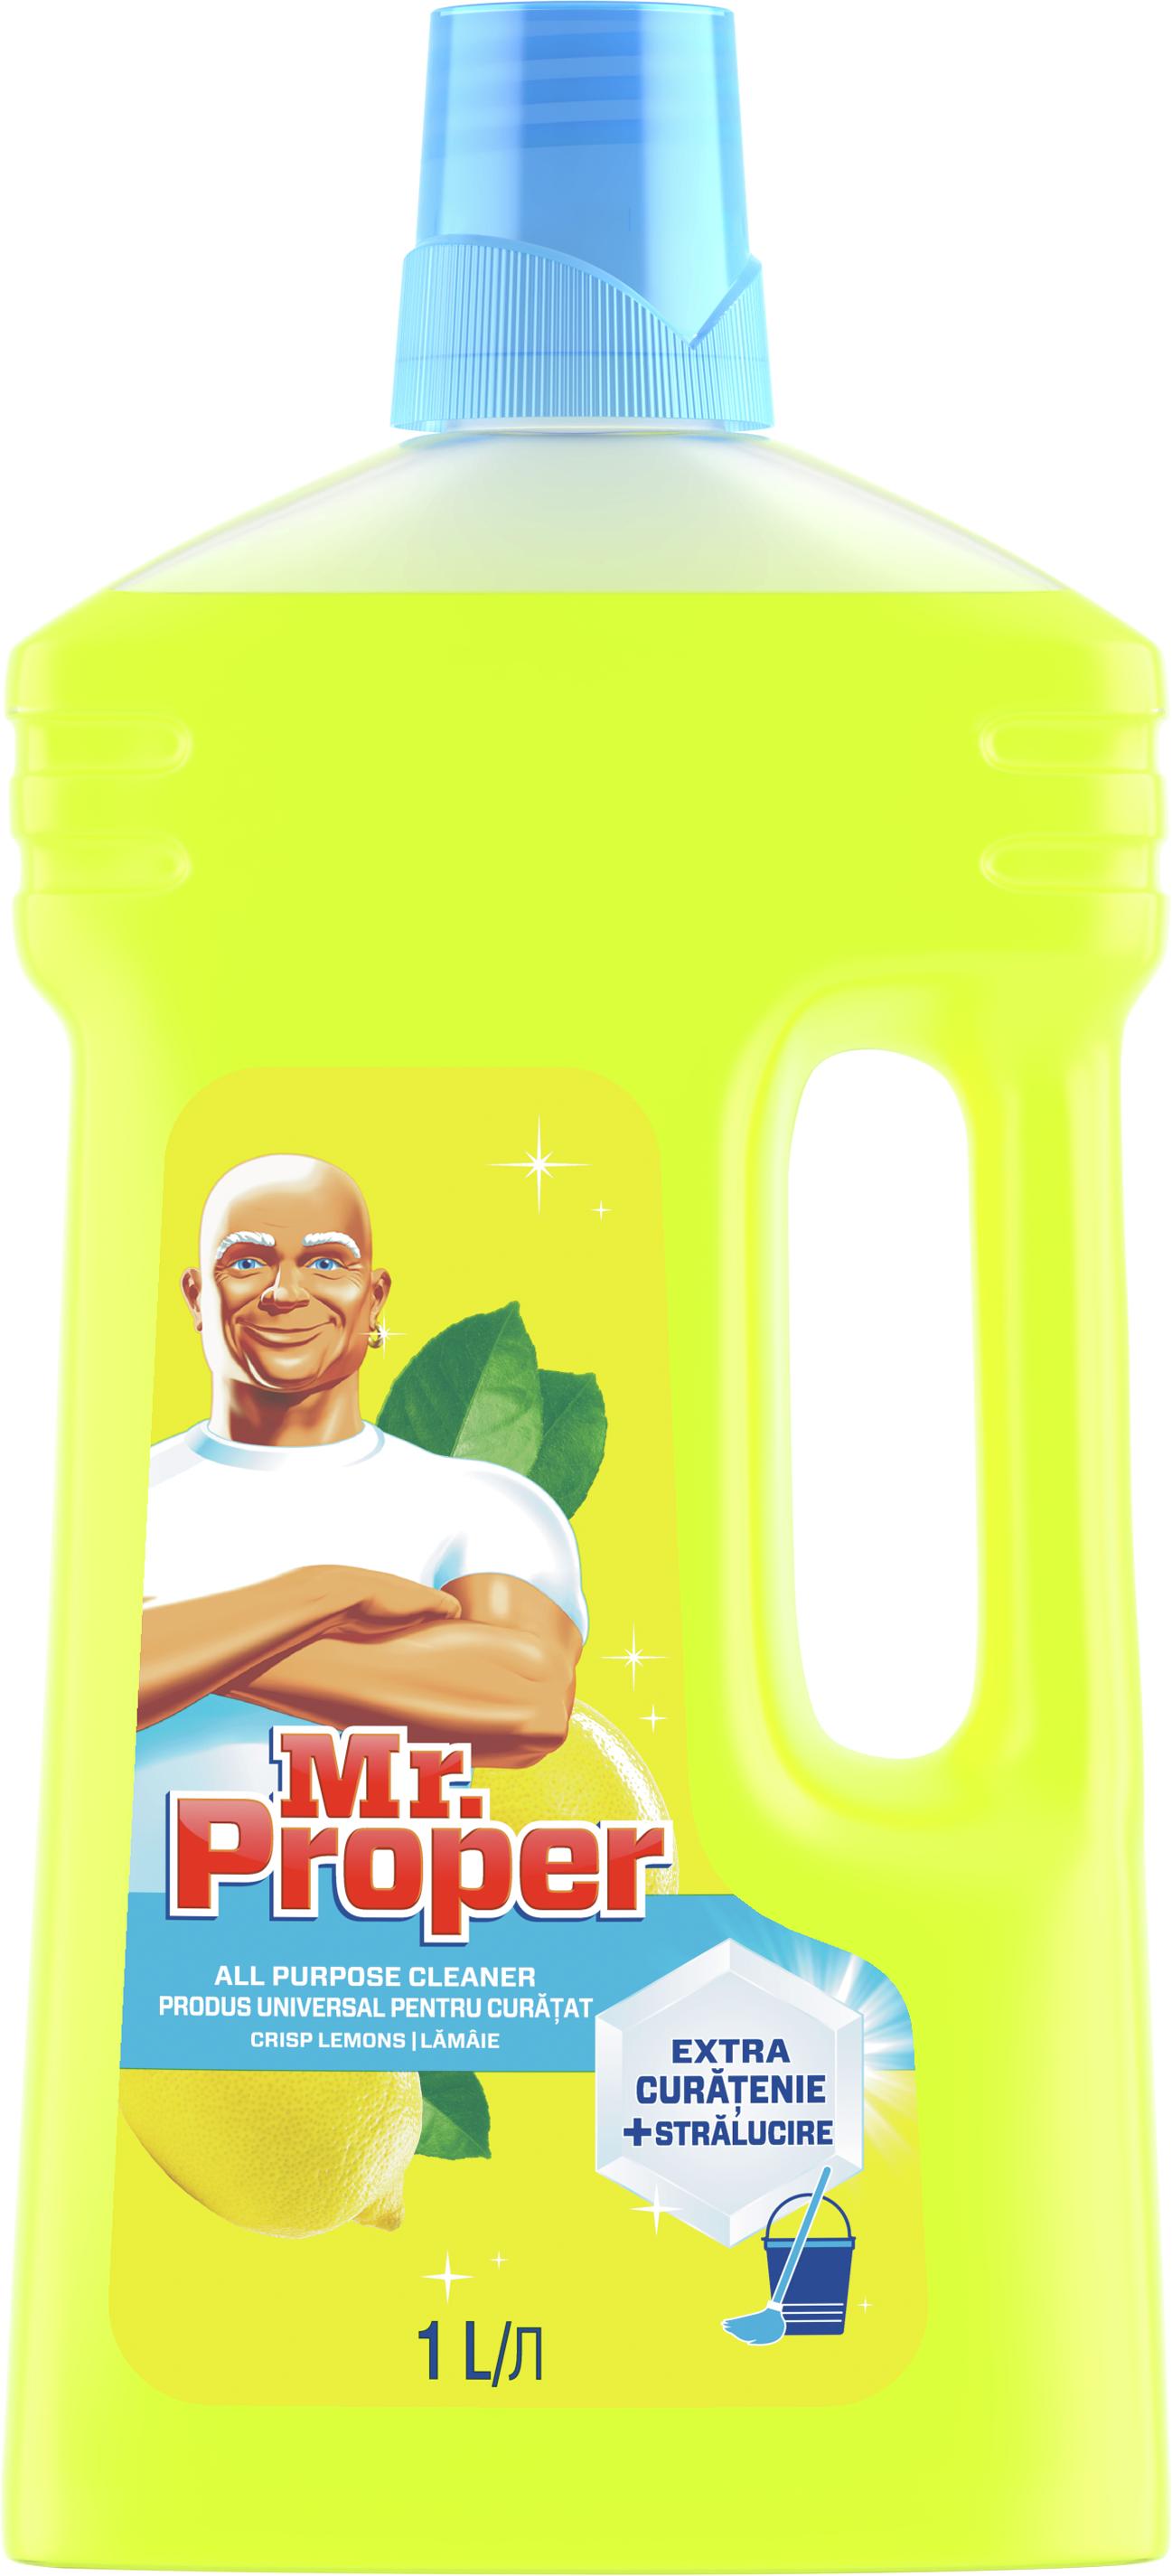 Slika za Sredstvo za čišćenje Mr Proper limun 1l